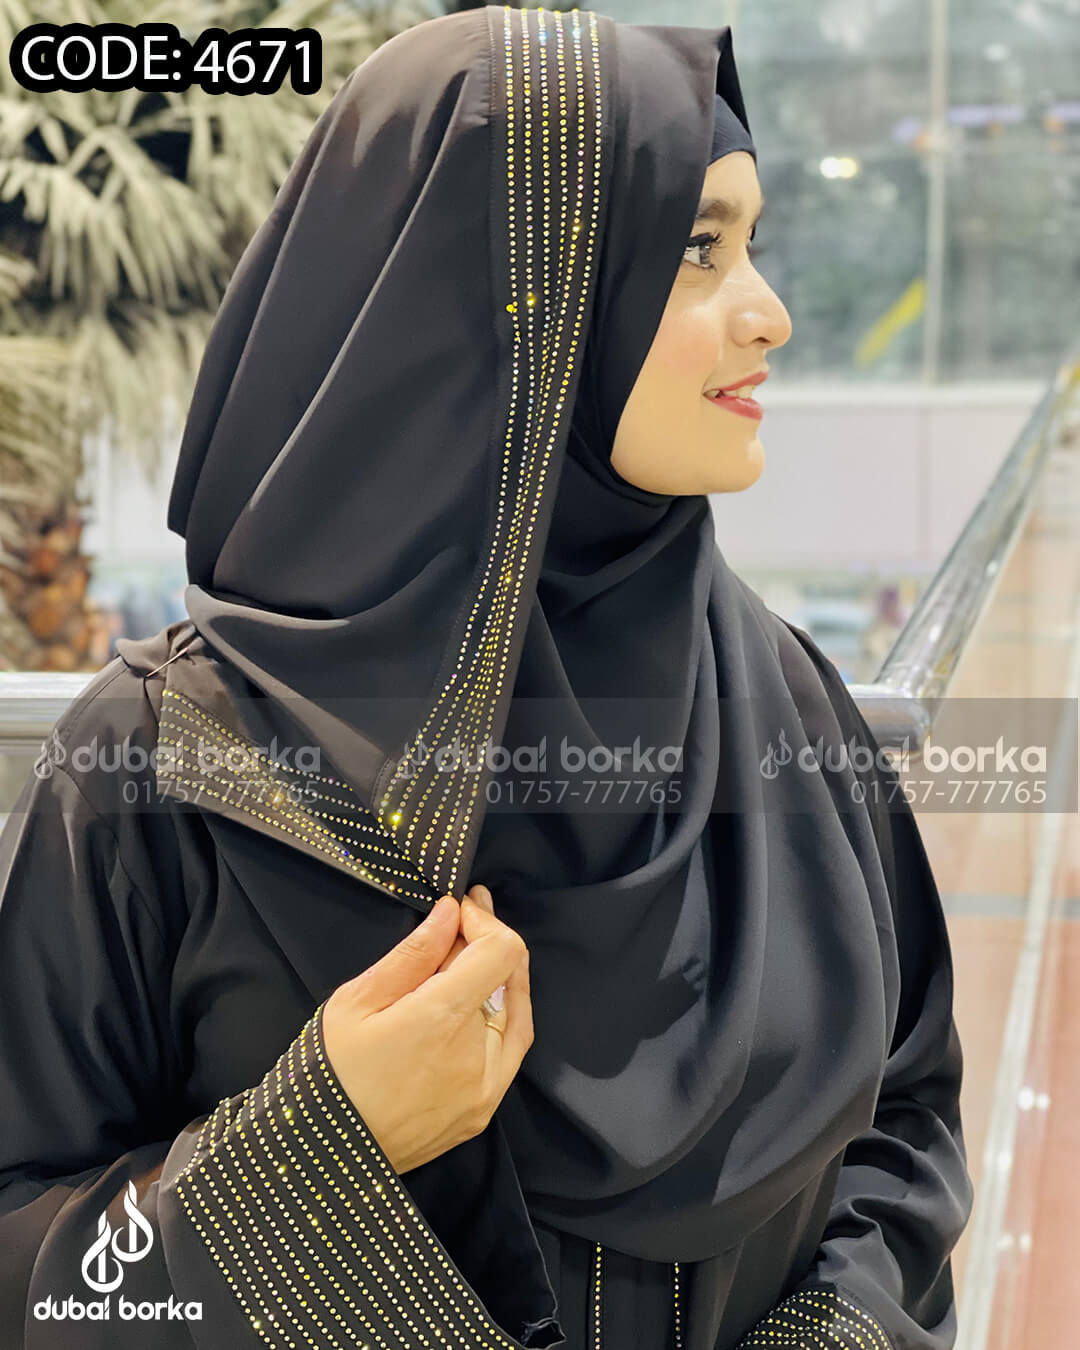 Dubai Stone Borka Black With Hijab